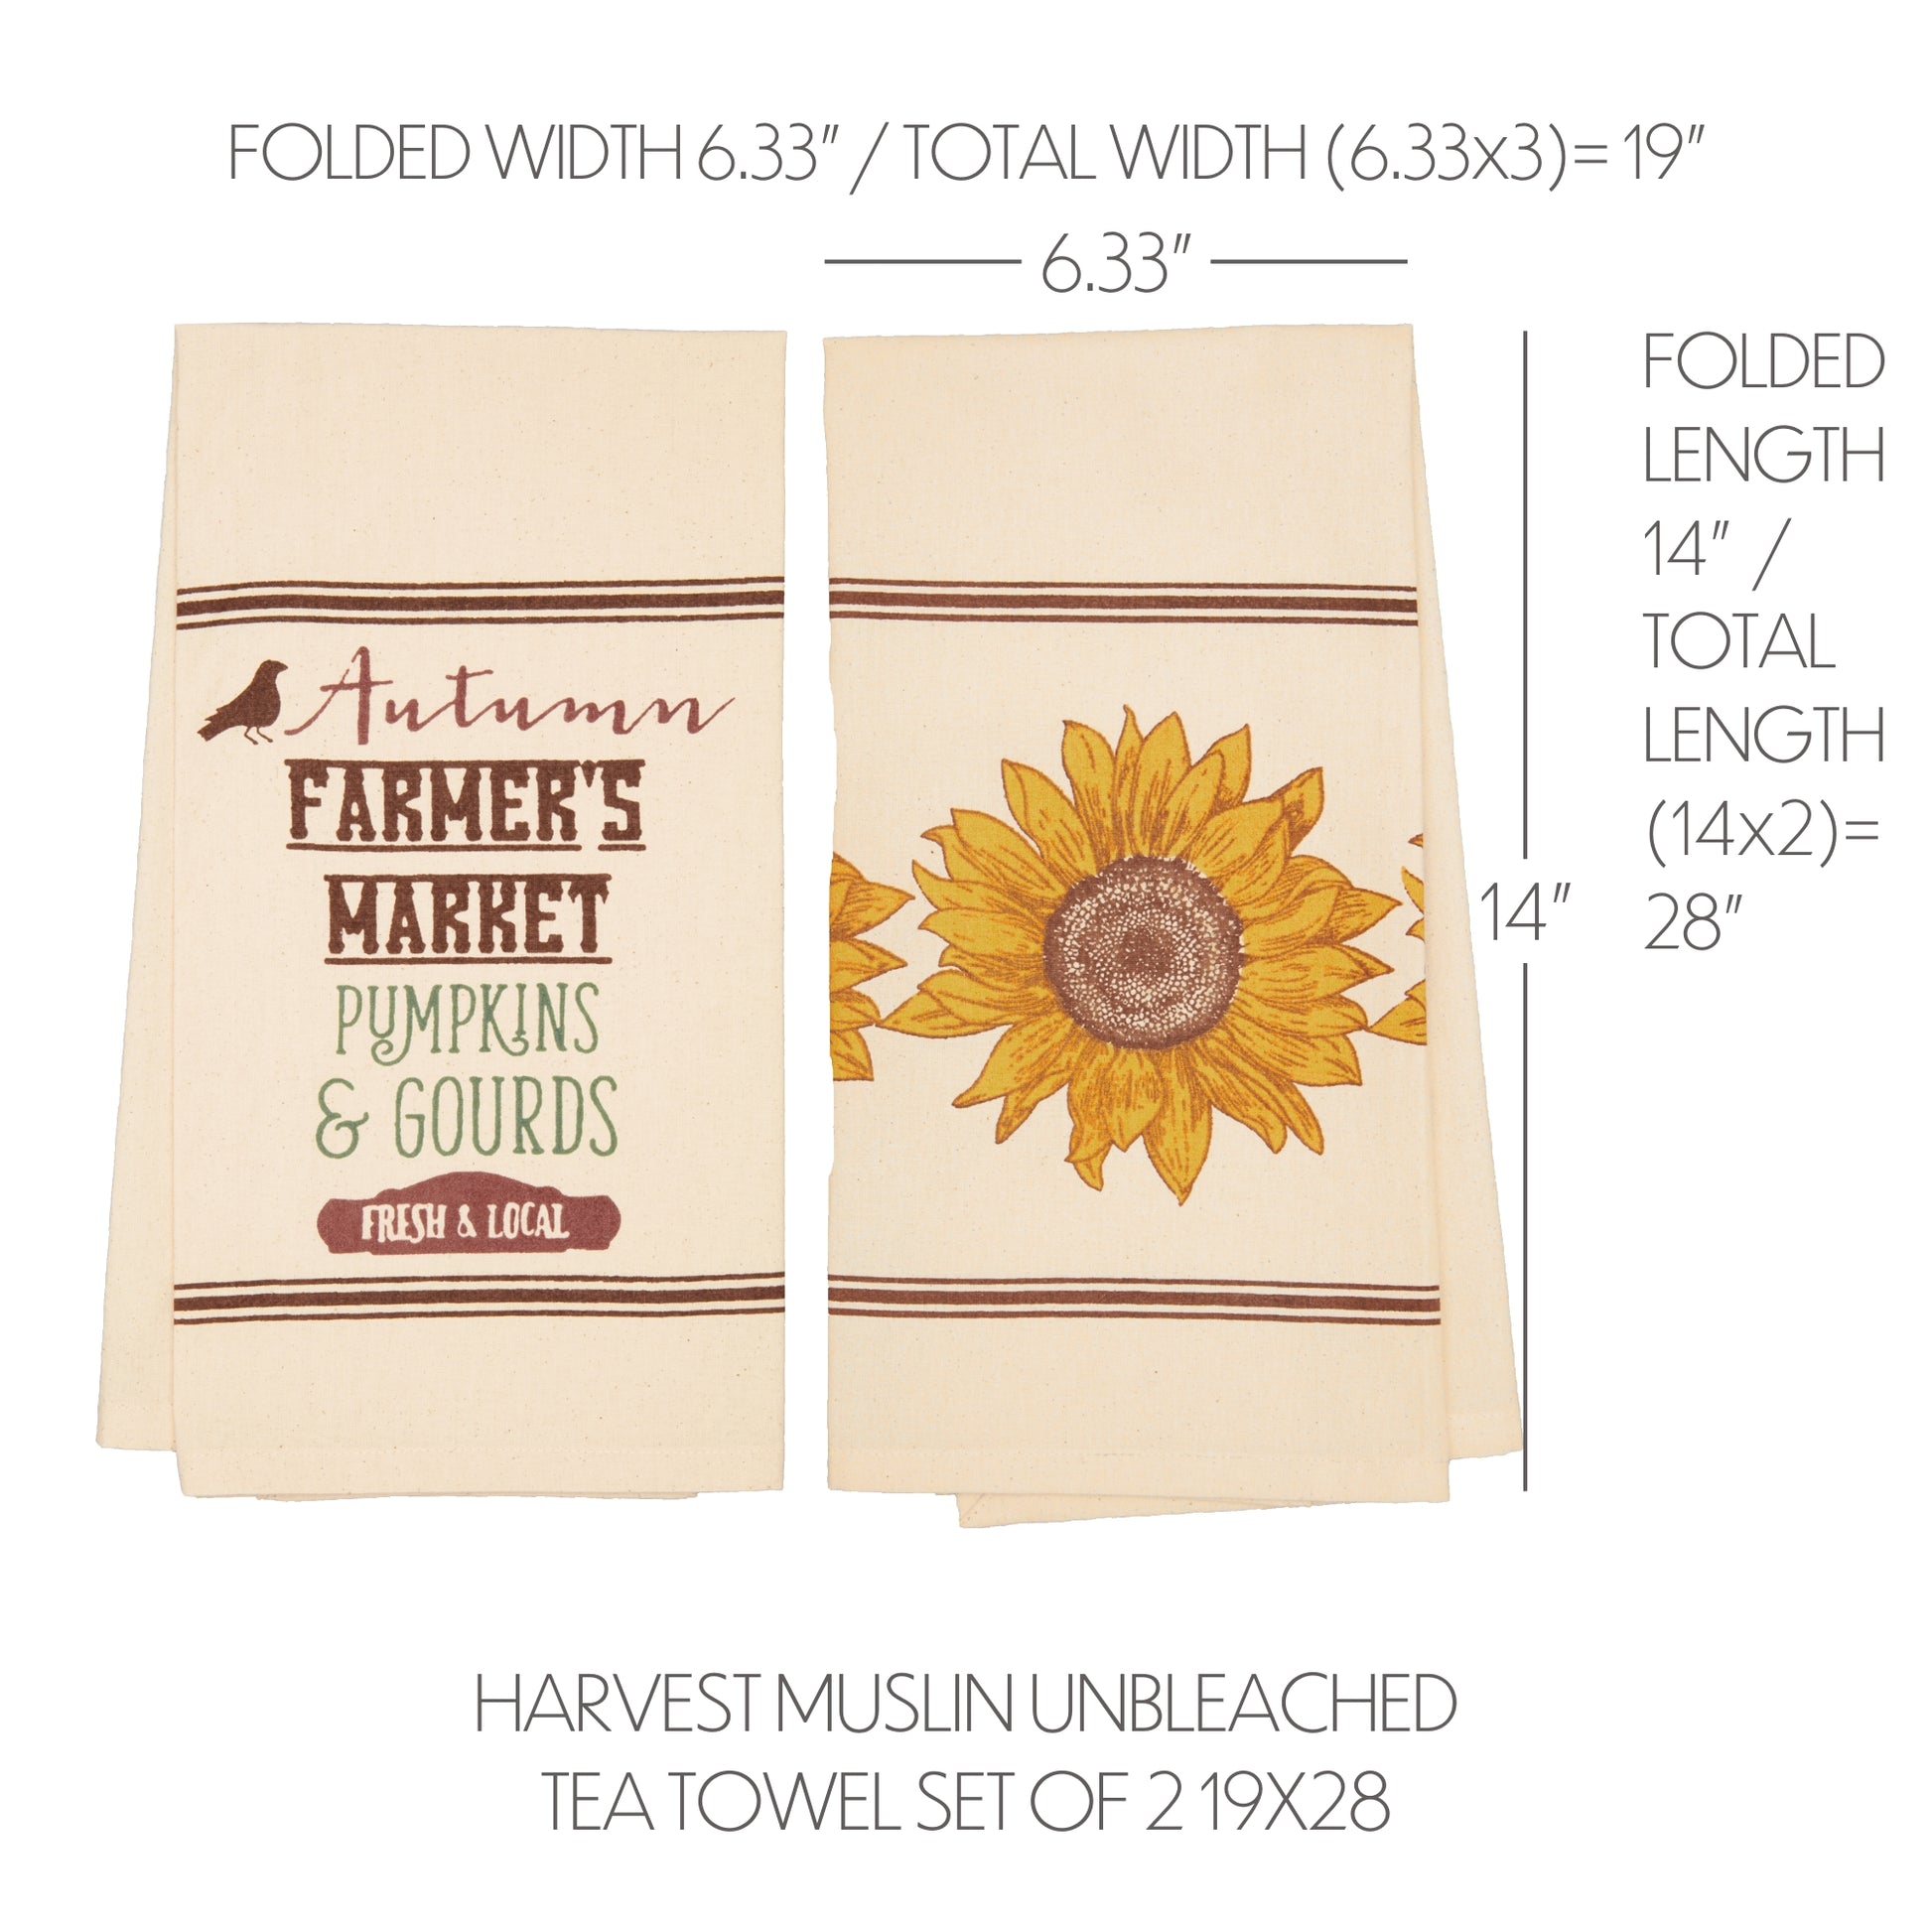 65288-Farmers-Market-Harvest-Muslin-Unbleached-Tea-Towel-Set-of-2-19x28-image